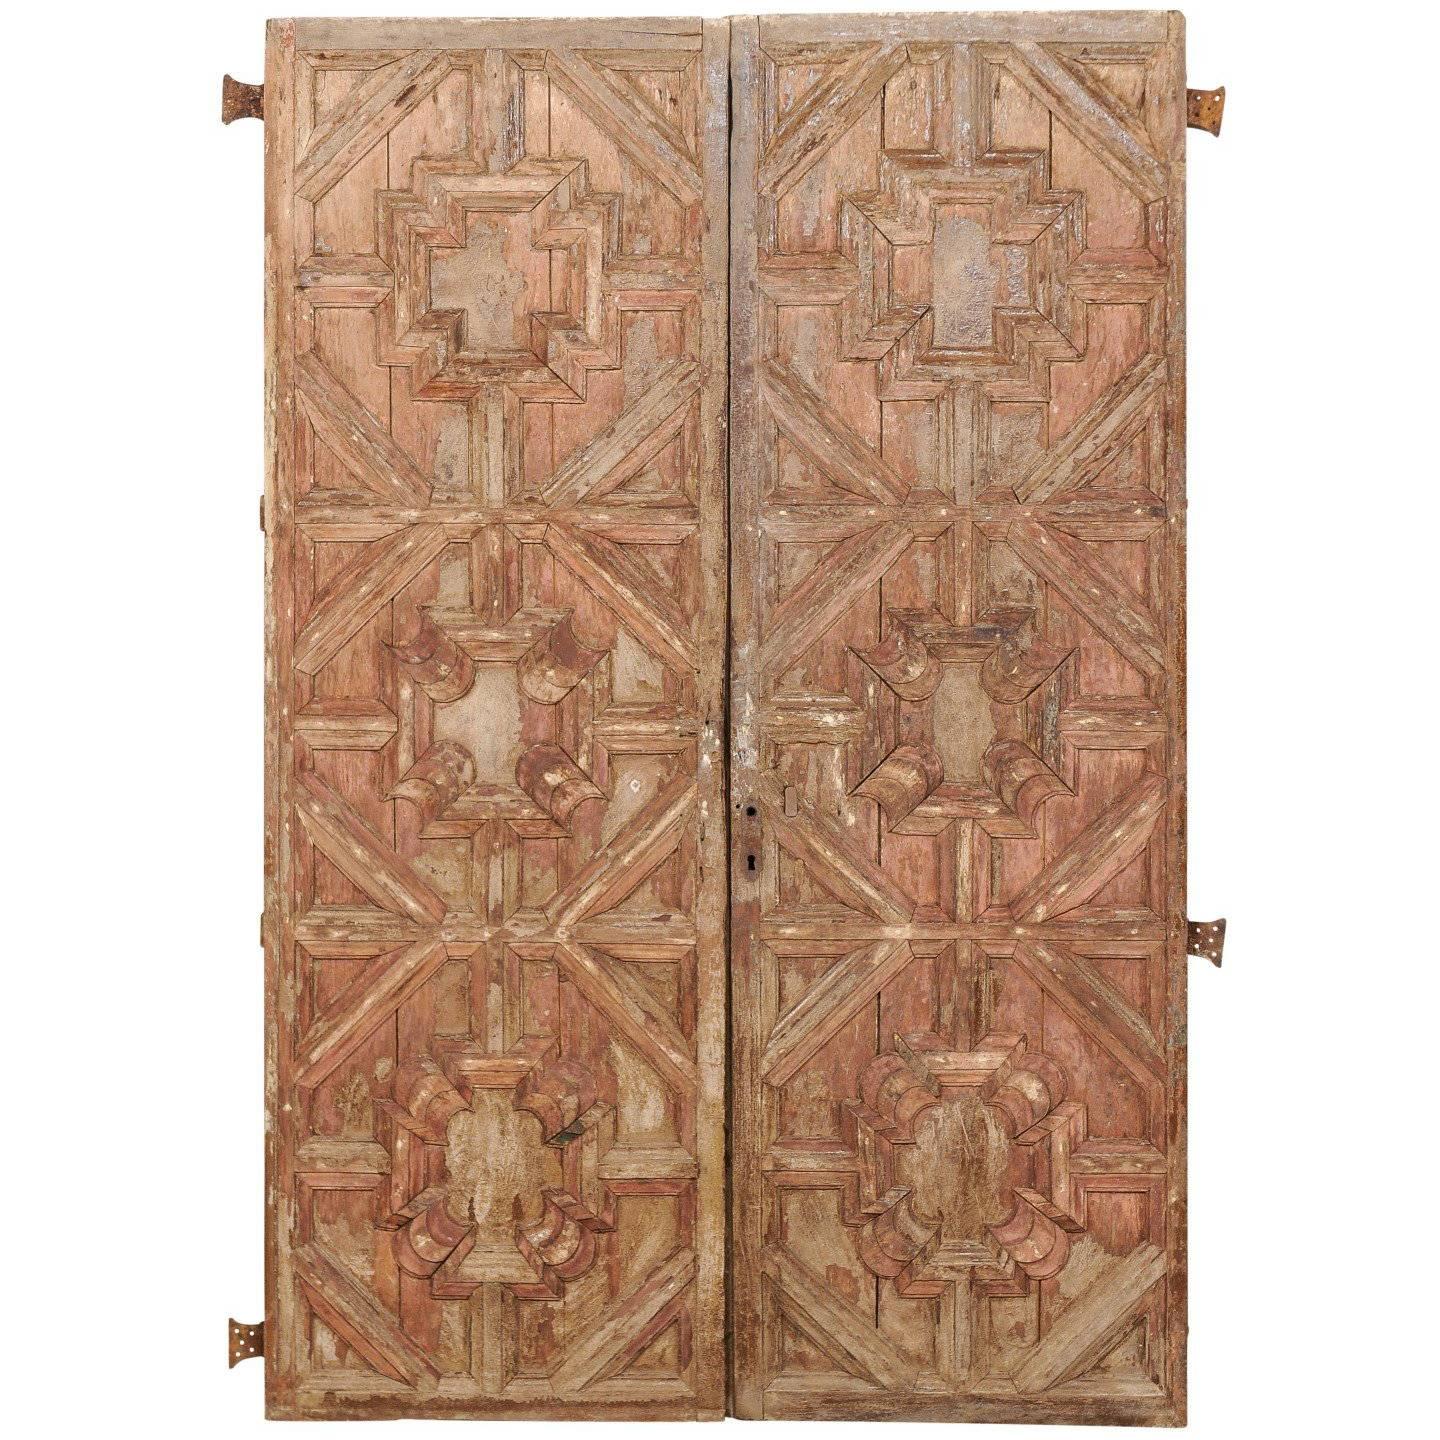 Pair of 18th Century Spanish Wood Doors with Original Finish